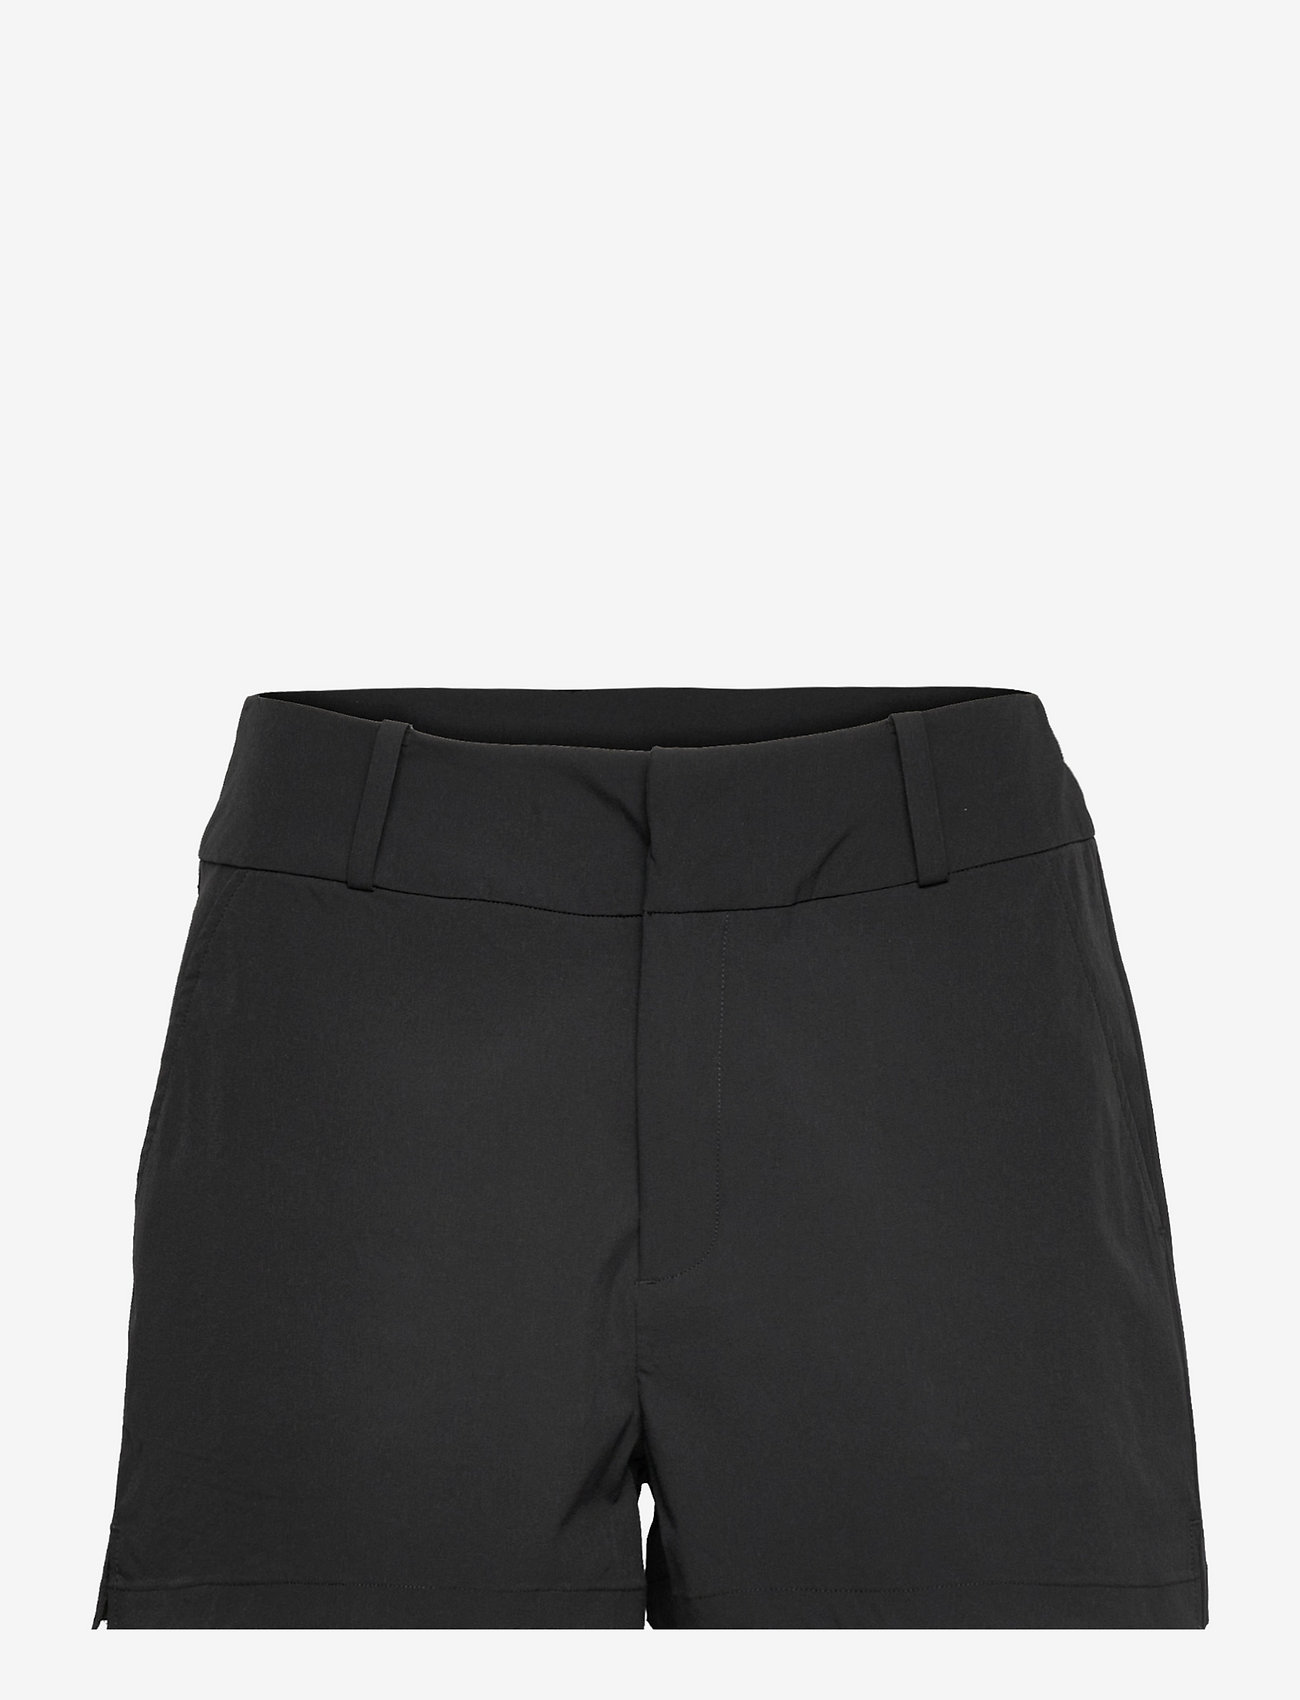 AIM'N - Black Tech Shorts - golf shorts - black - 1